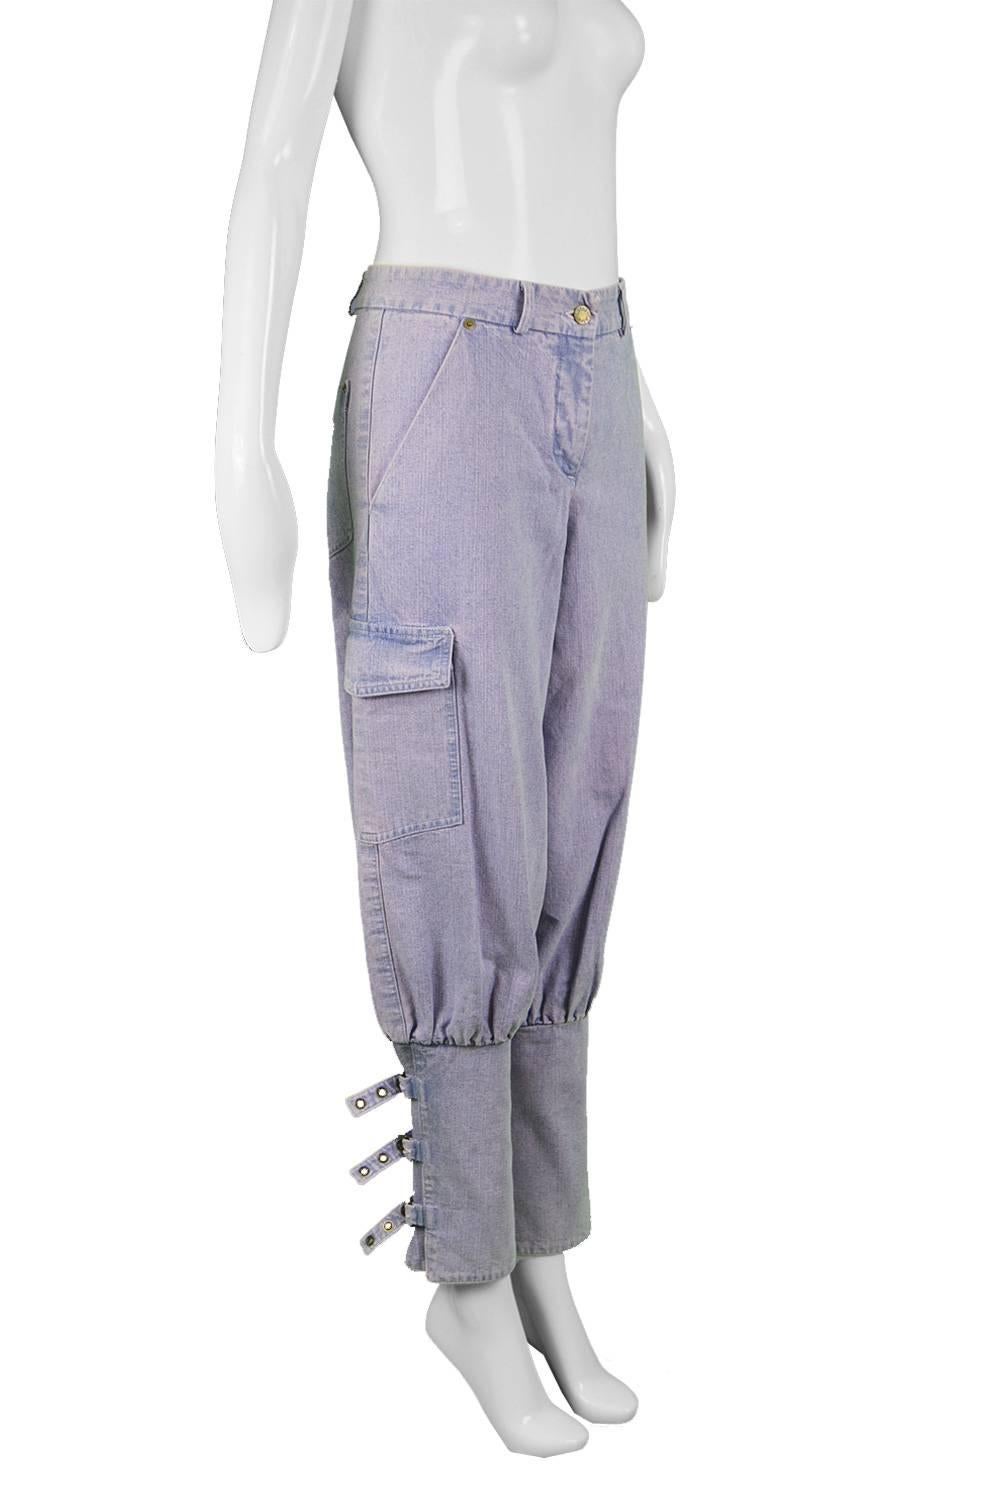 Women's Chloé by Phoebe Philo Blue Pastel Pink Overdyed Denim Jeans / Shorts, S / S 2002